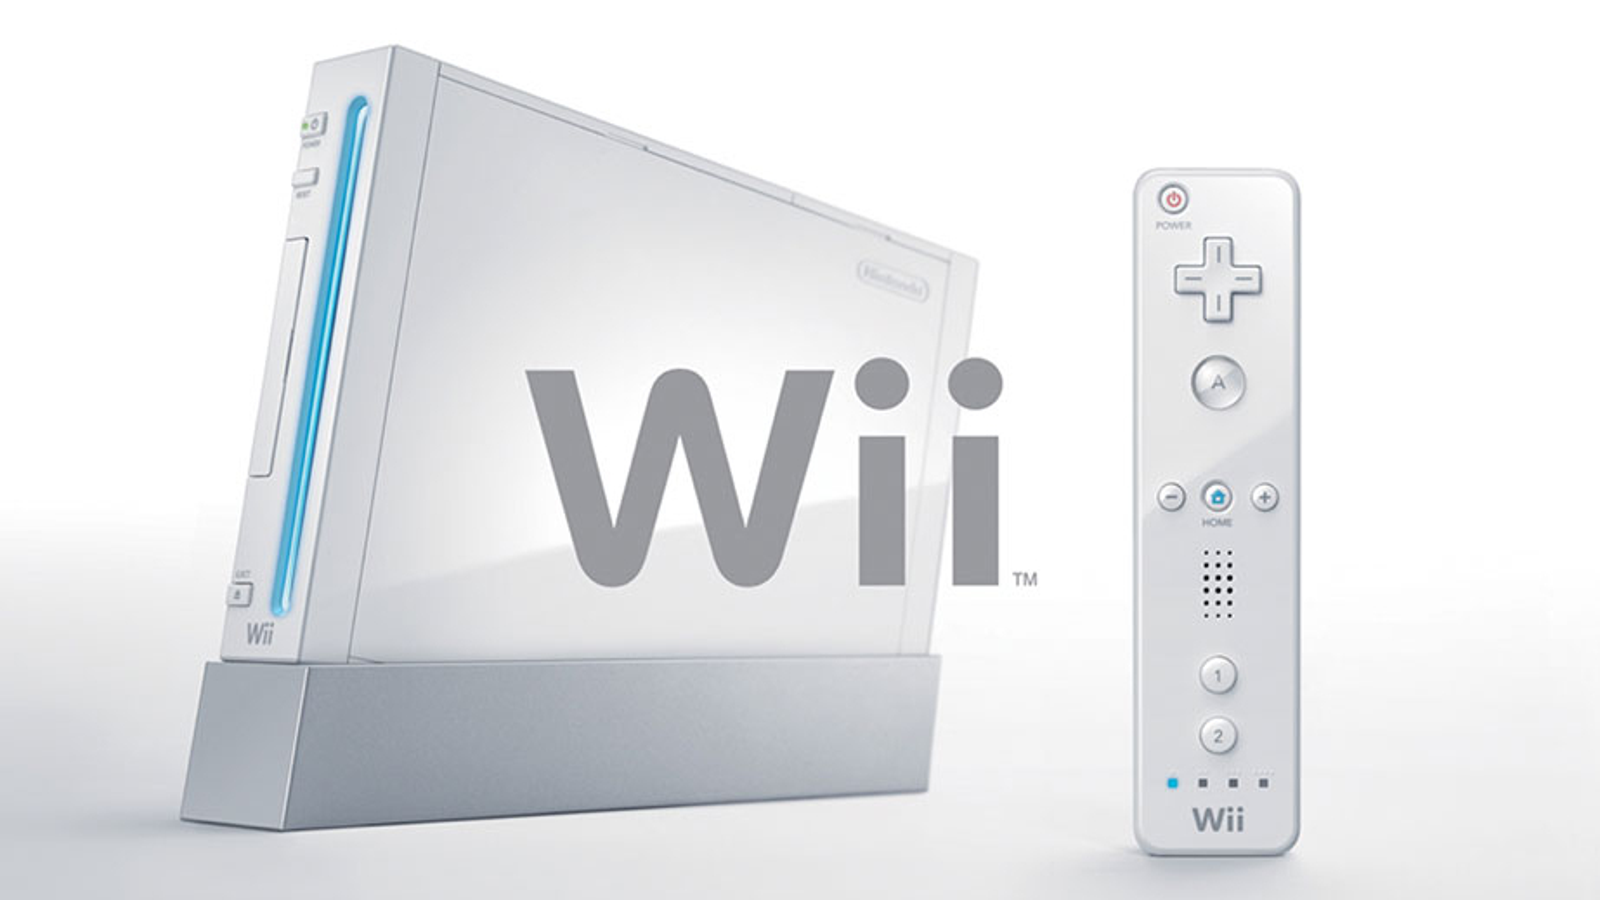 Nintendo Wii and DSi Shop Channels Go Dark, No Word on Returning